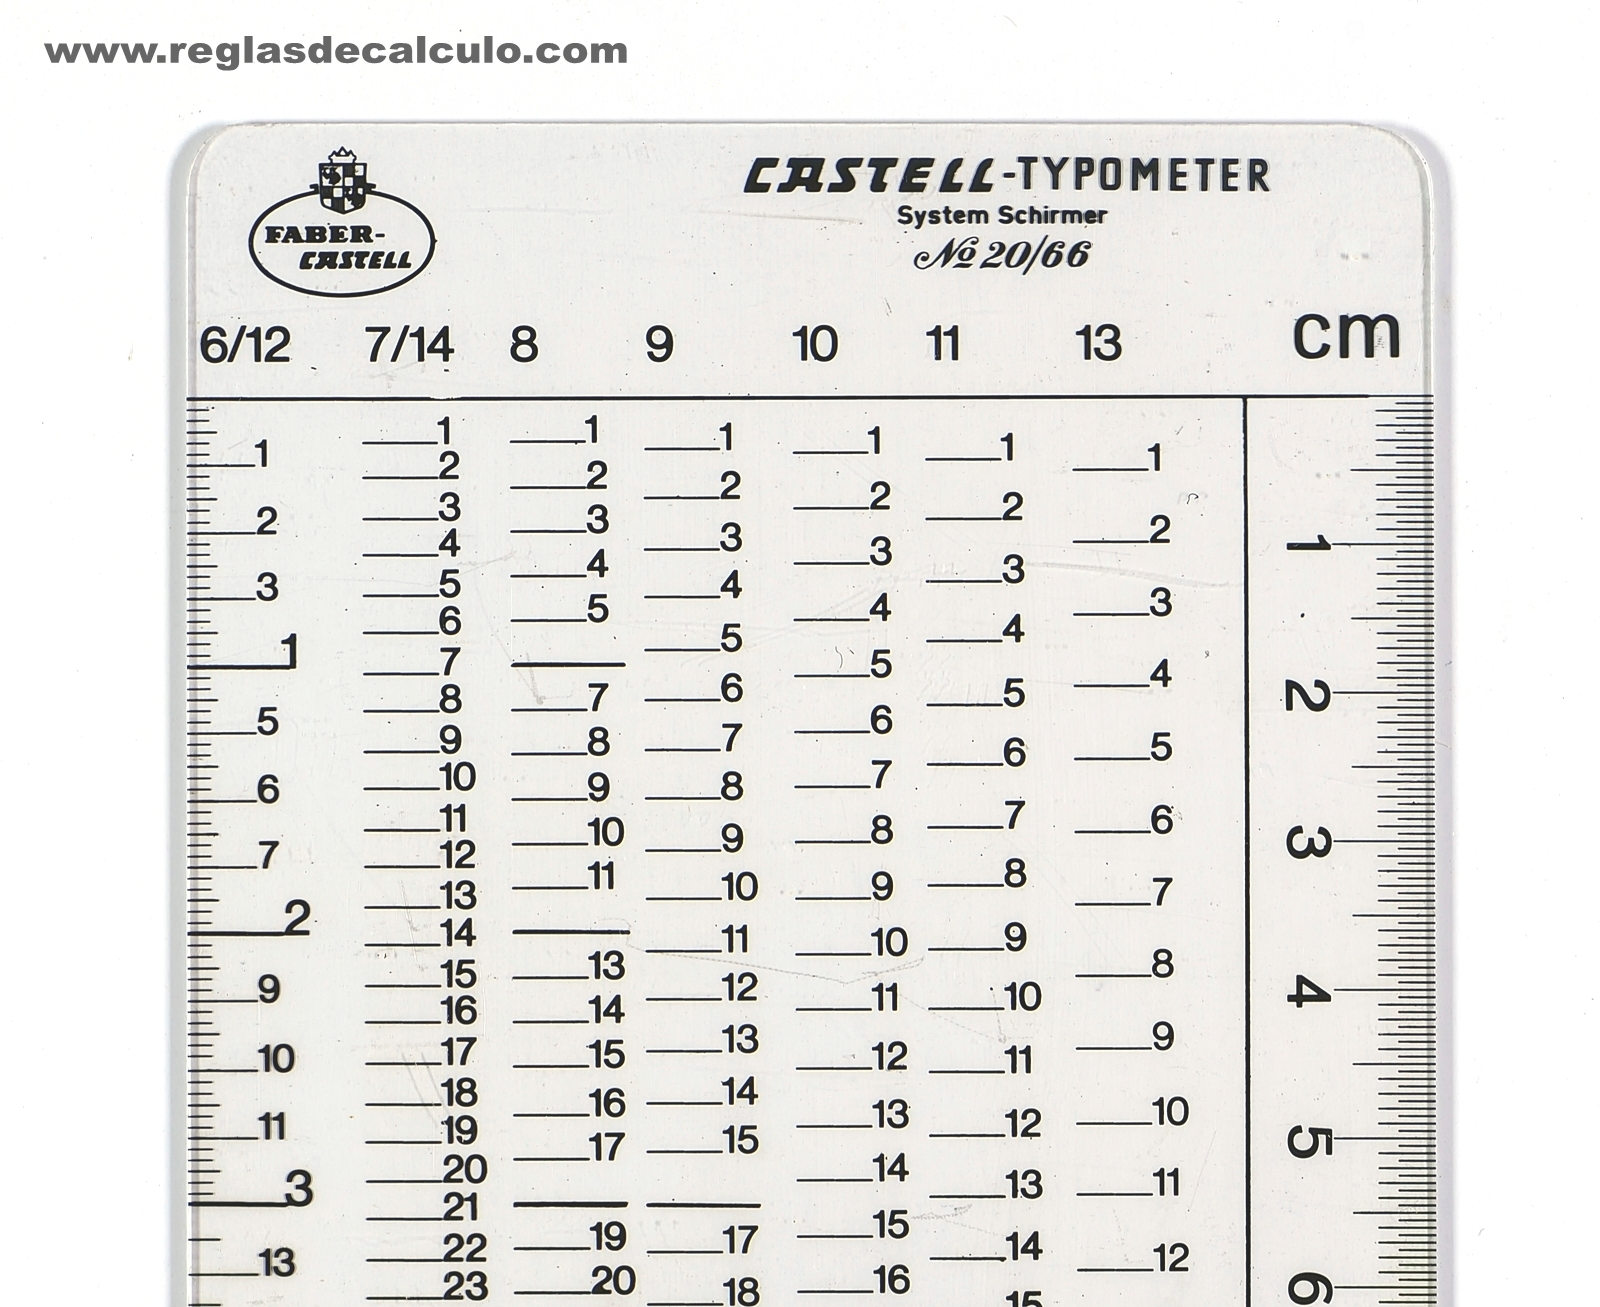 Faber Castell 20/66 Typometer Regla de Calculo Slide rule